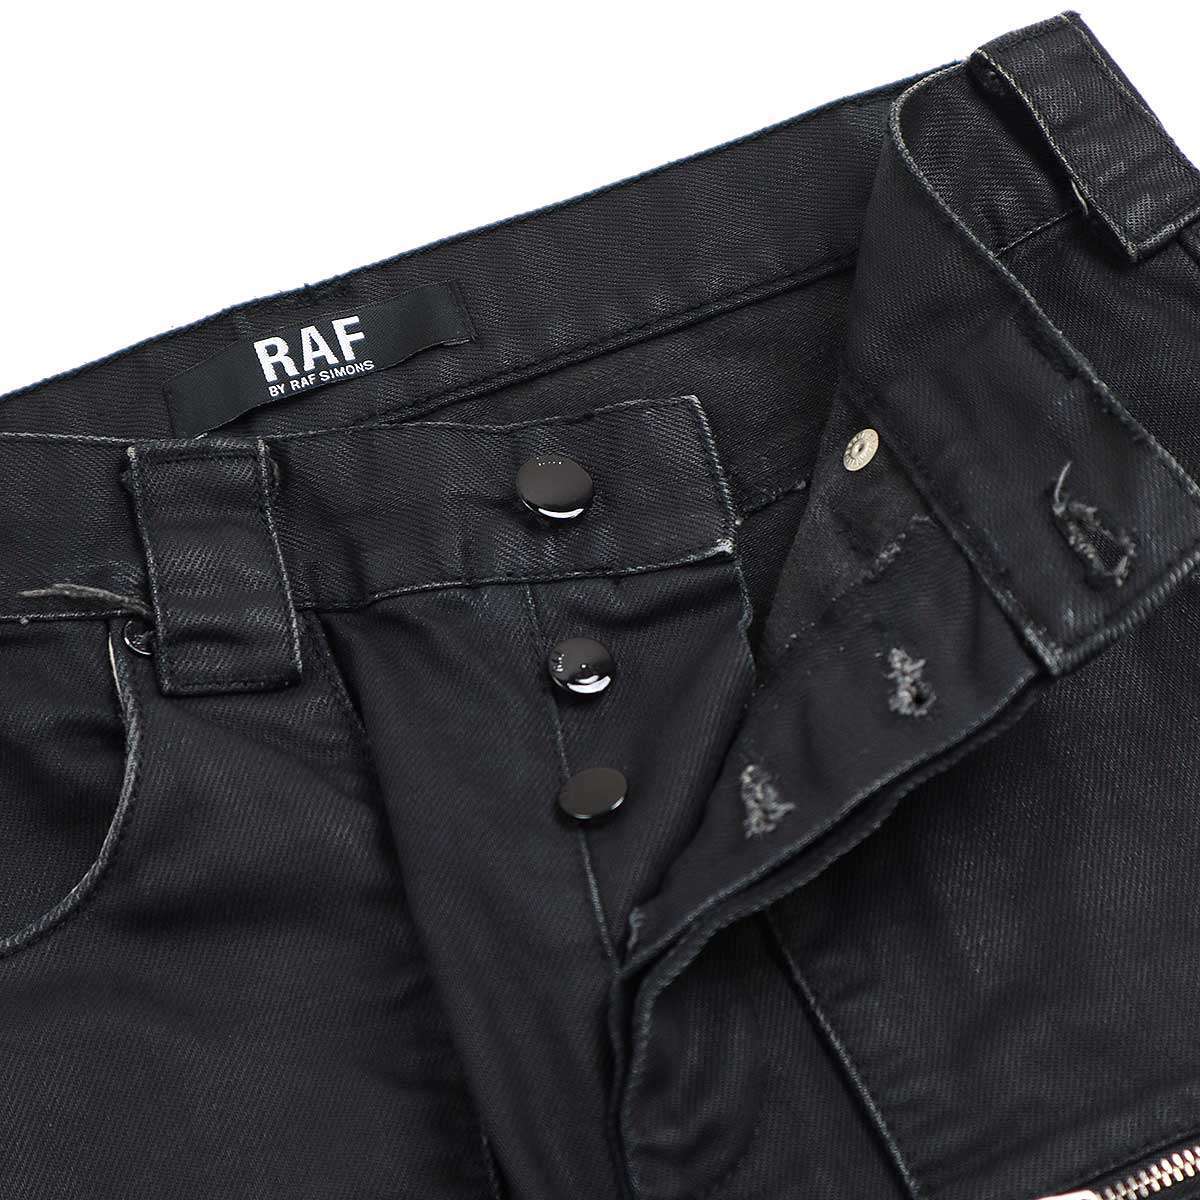 RAF BY RAF SIMONS черновой bai Raf Simons 1998AW переиздание KRAFTWERK покрытие bo винтаж брюки-карго черный 30 ITIXRC8L3POK